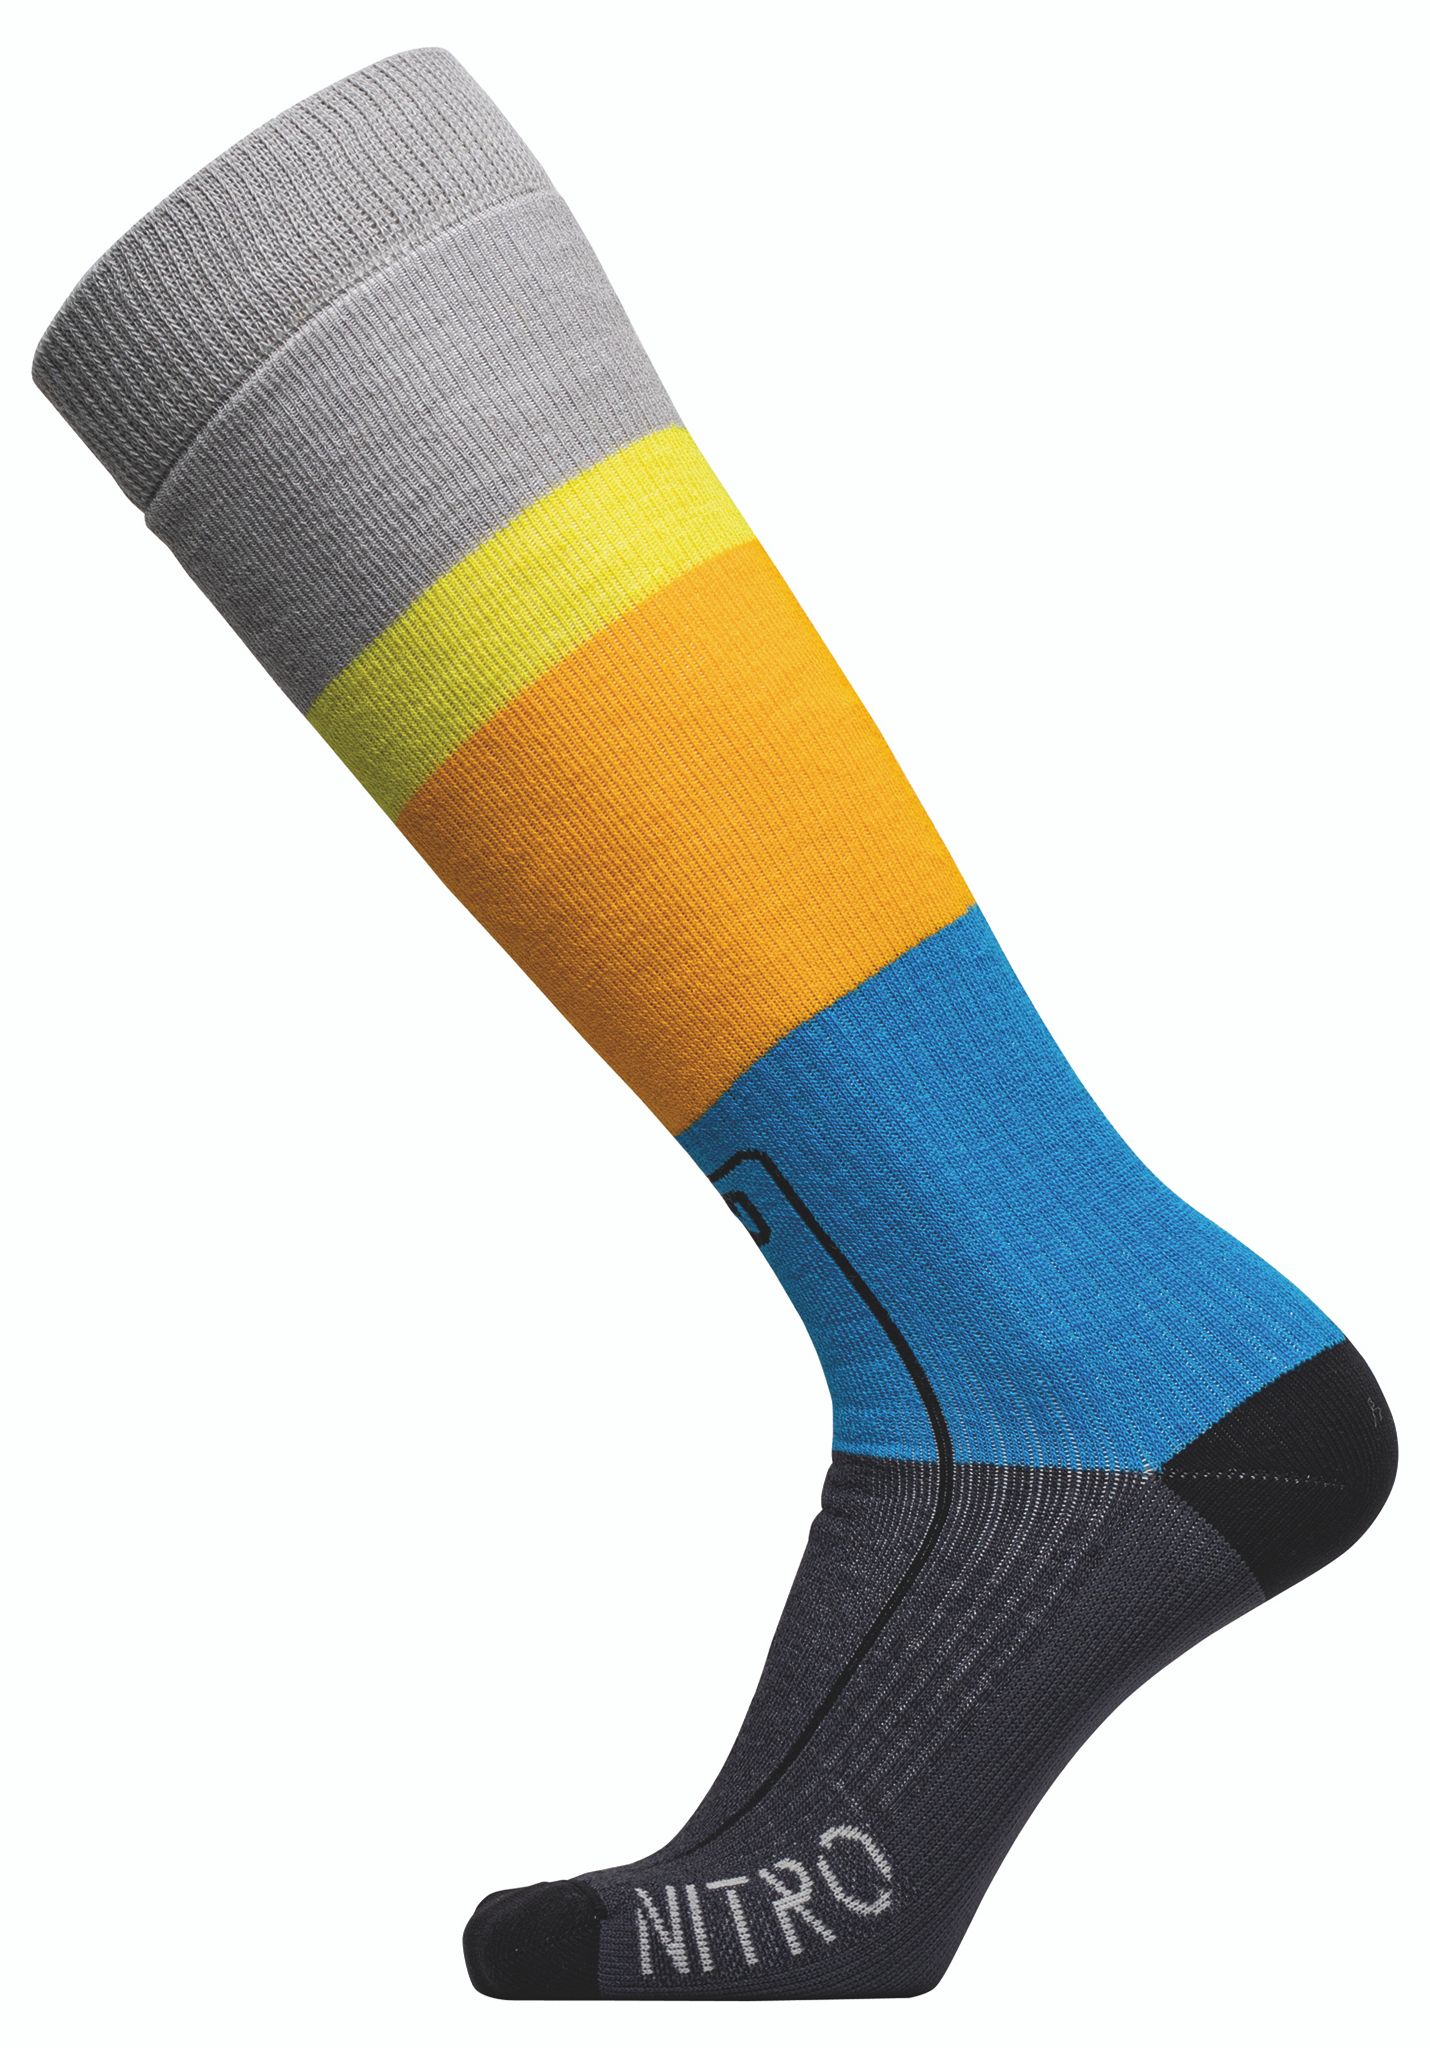 Nitro Cloud 5 Lange Socken grau-gelb-blau-karamell L